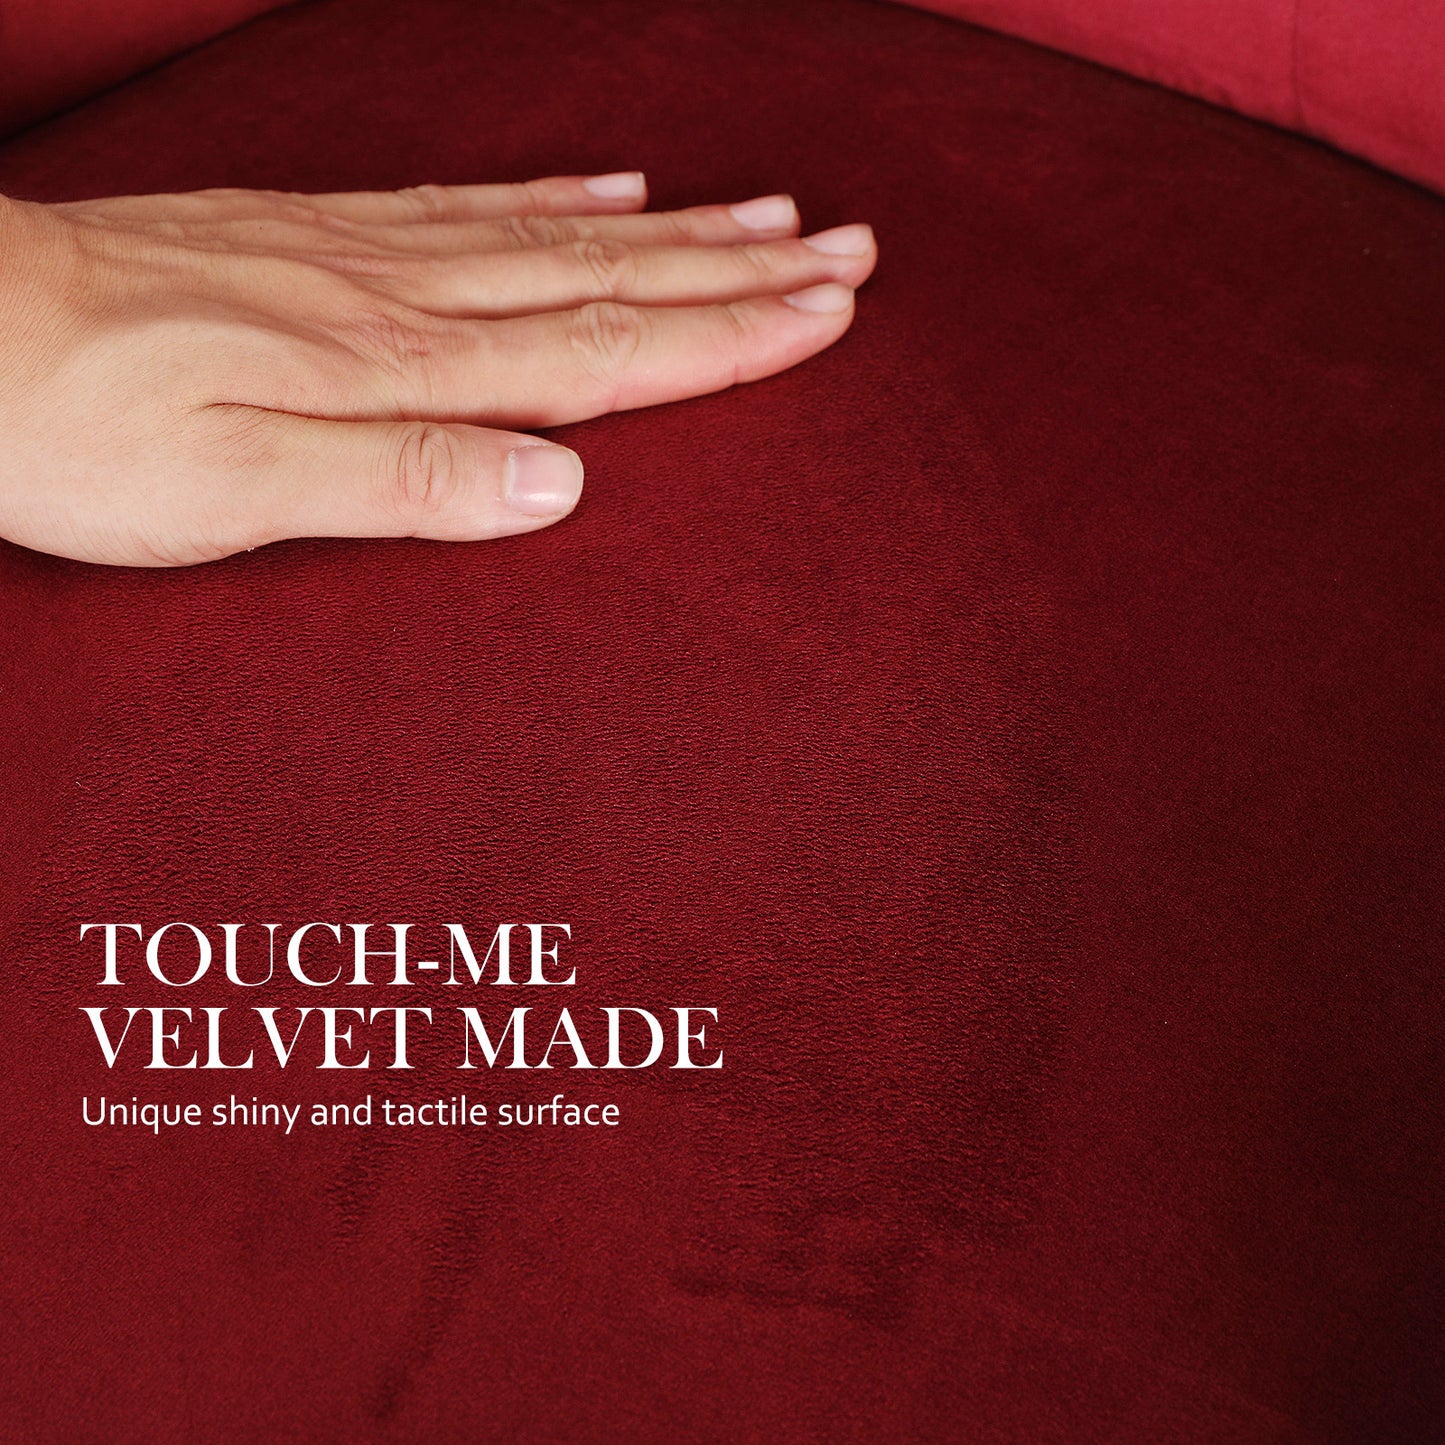 Arabella Set of 4 French Provincial Dining Chair Ring Studded Velvet Rubberwood Leg - Bordeaux Red